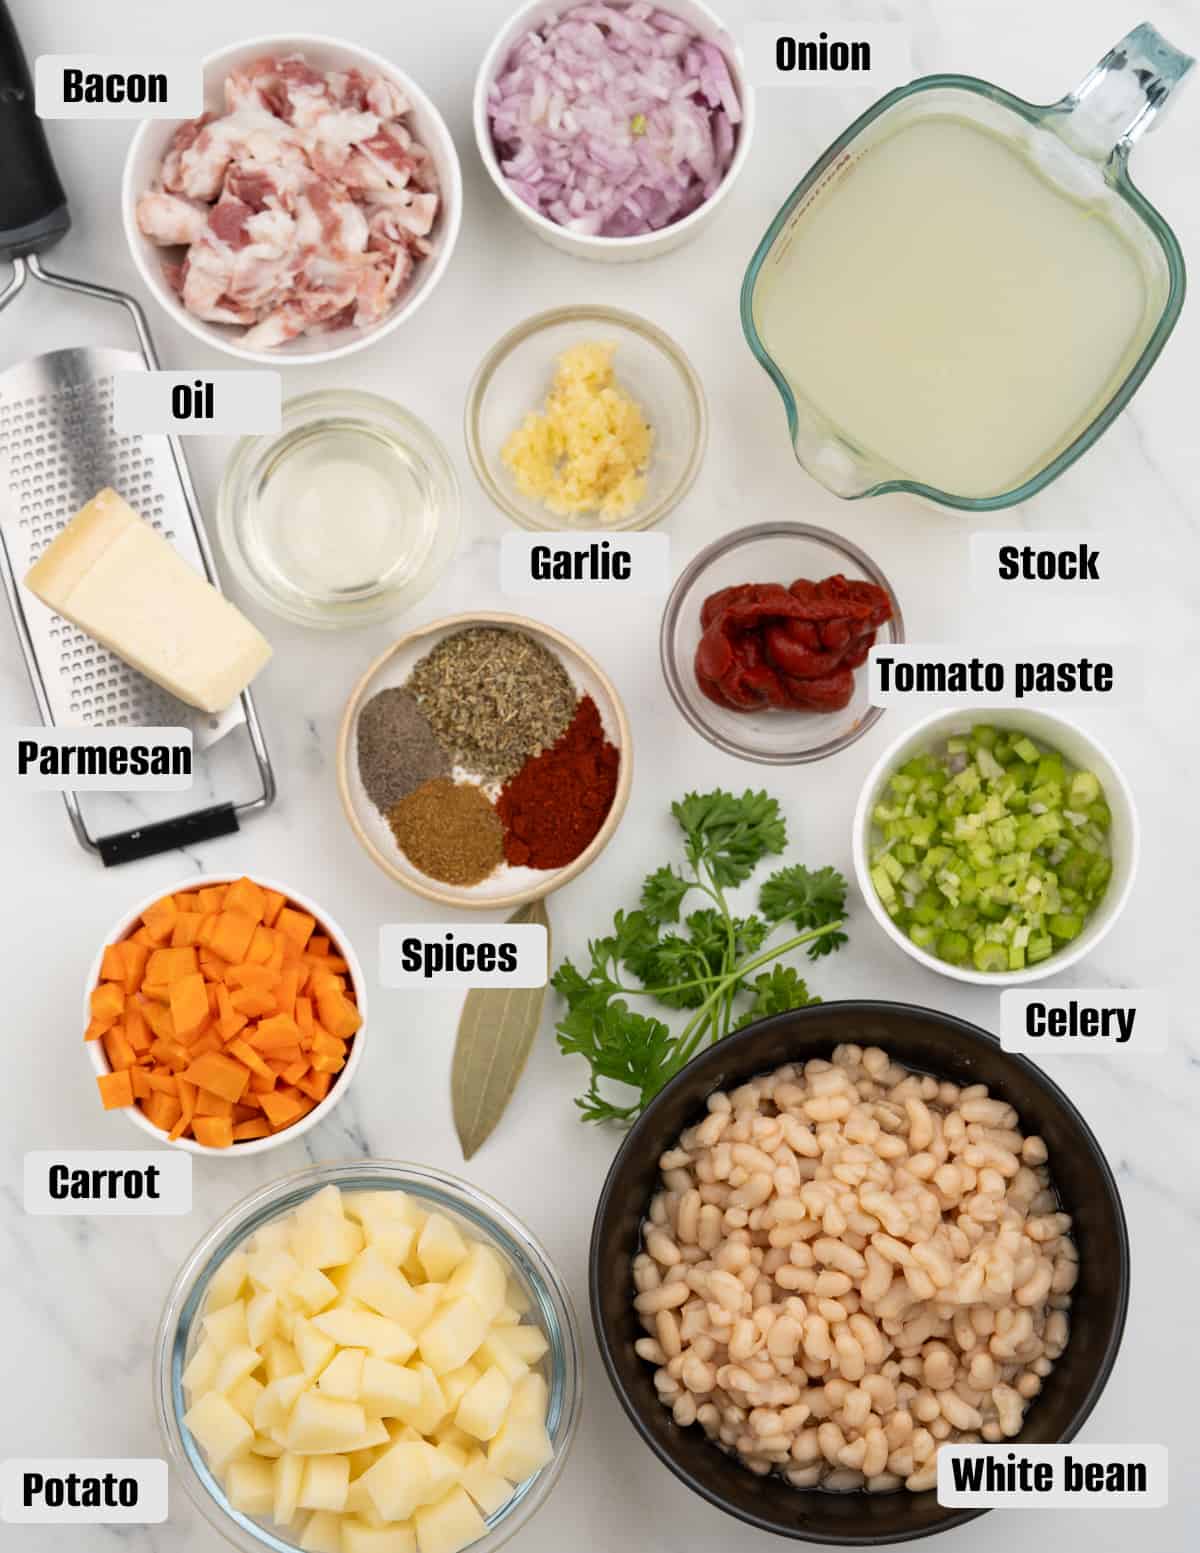 Ingredients for potato white beans soup.